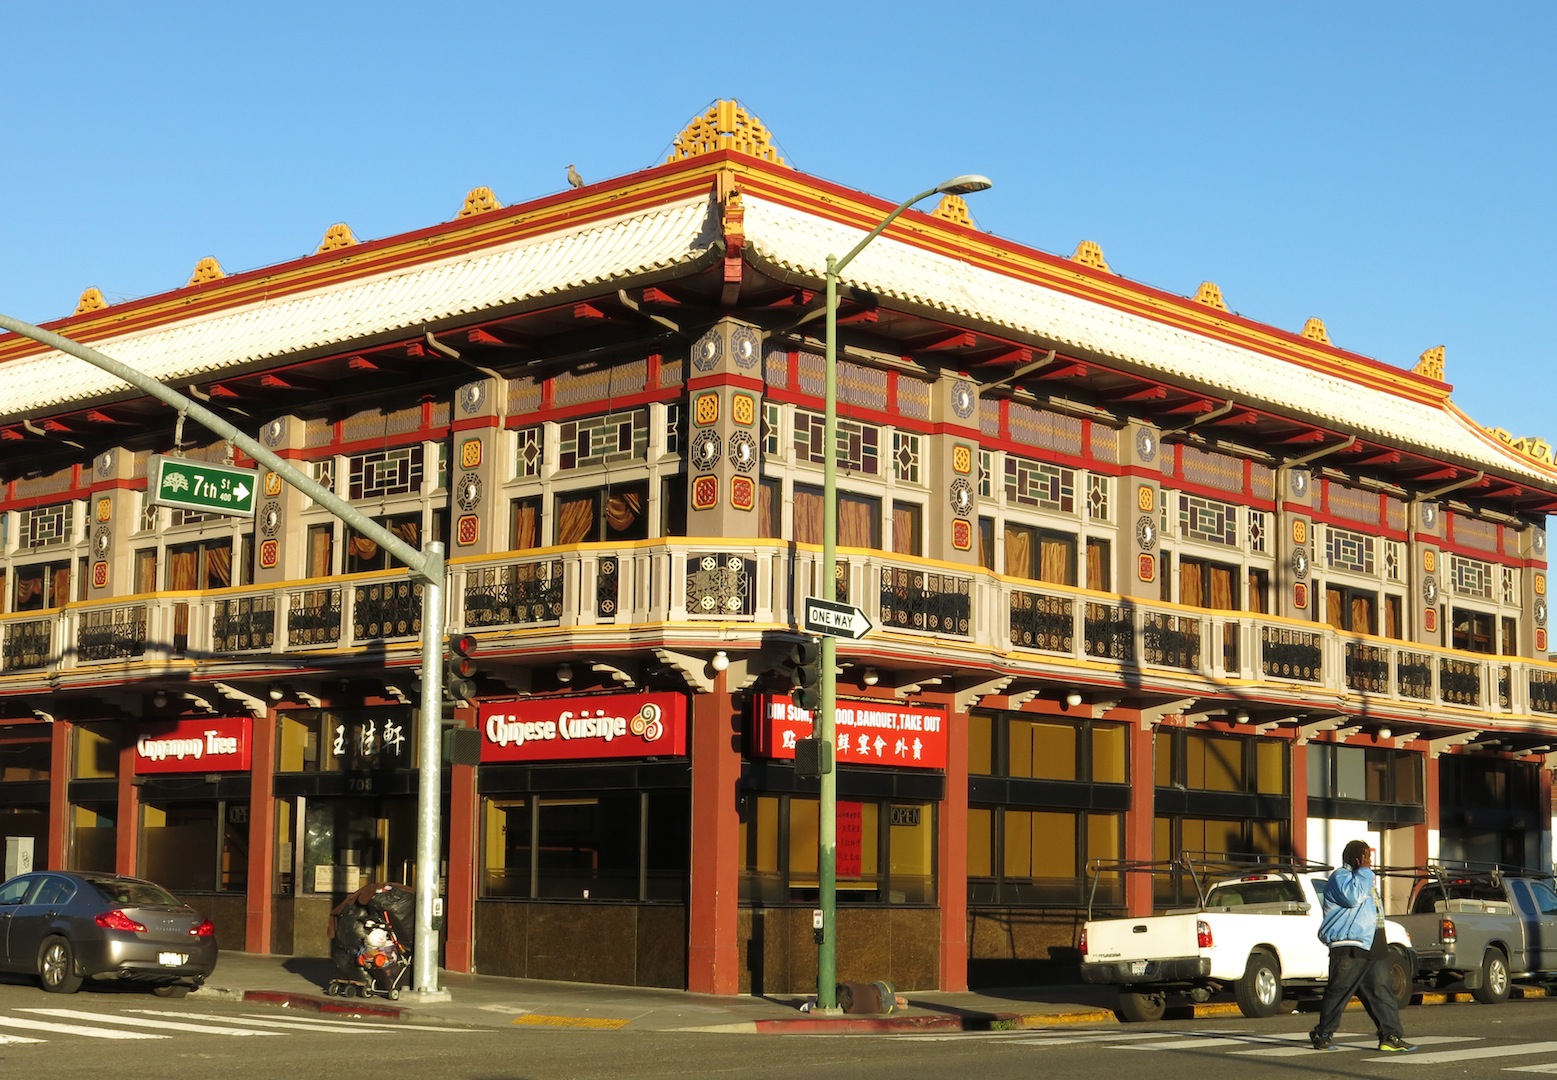 Oakland Daily Photo: Chinatown restaurant